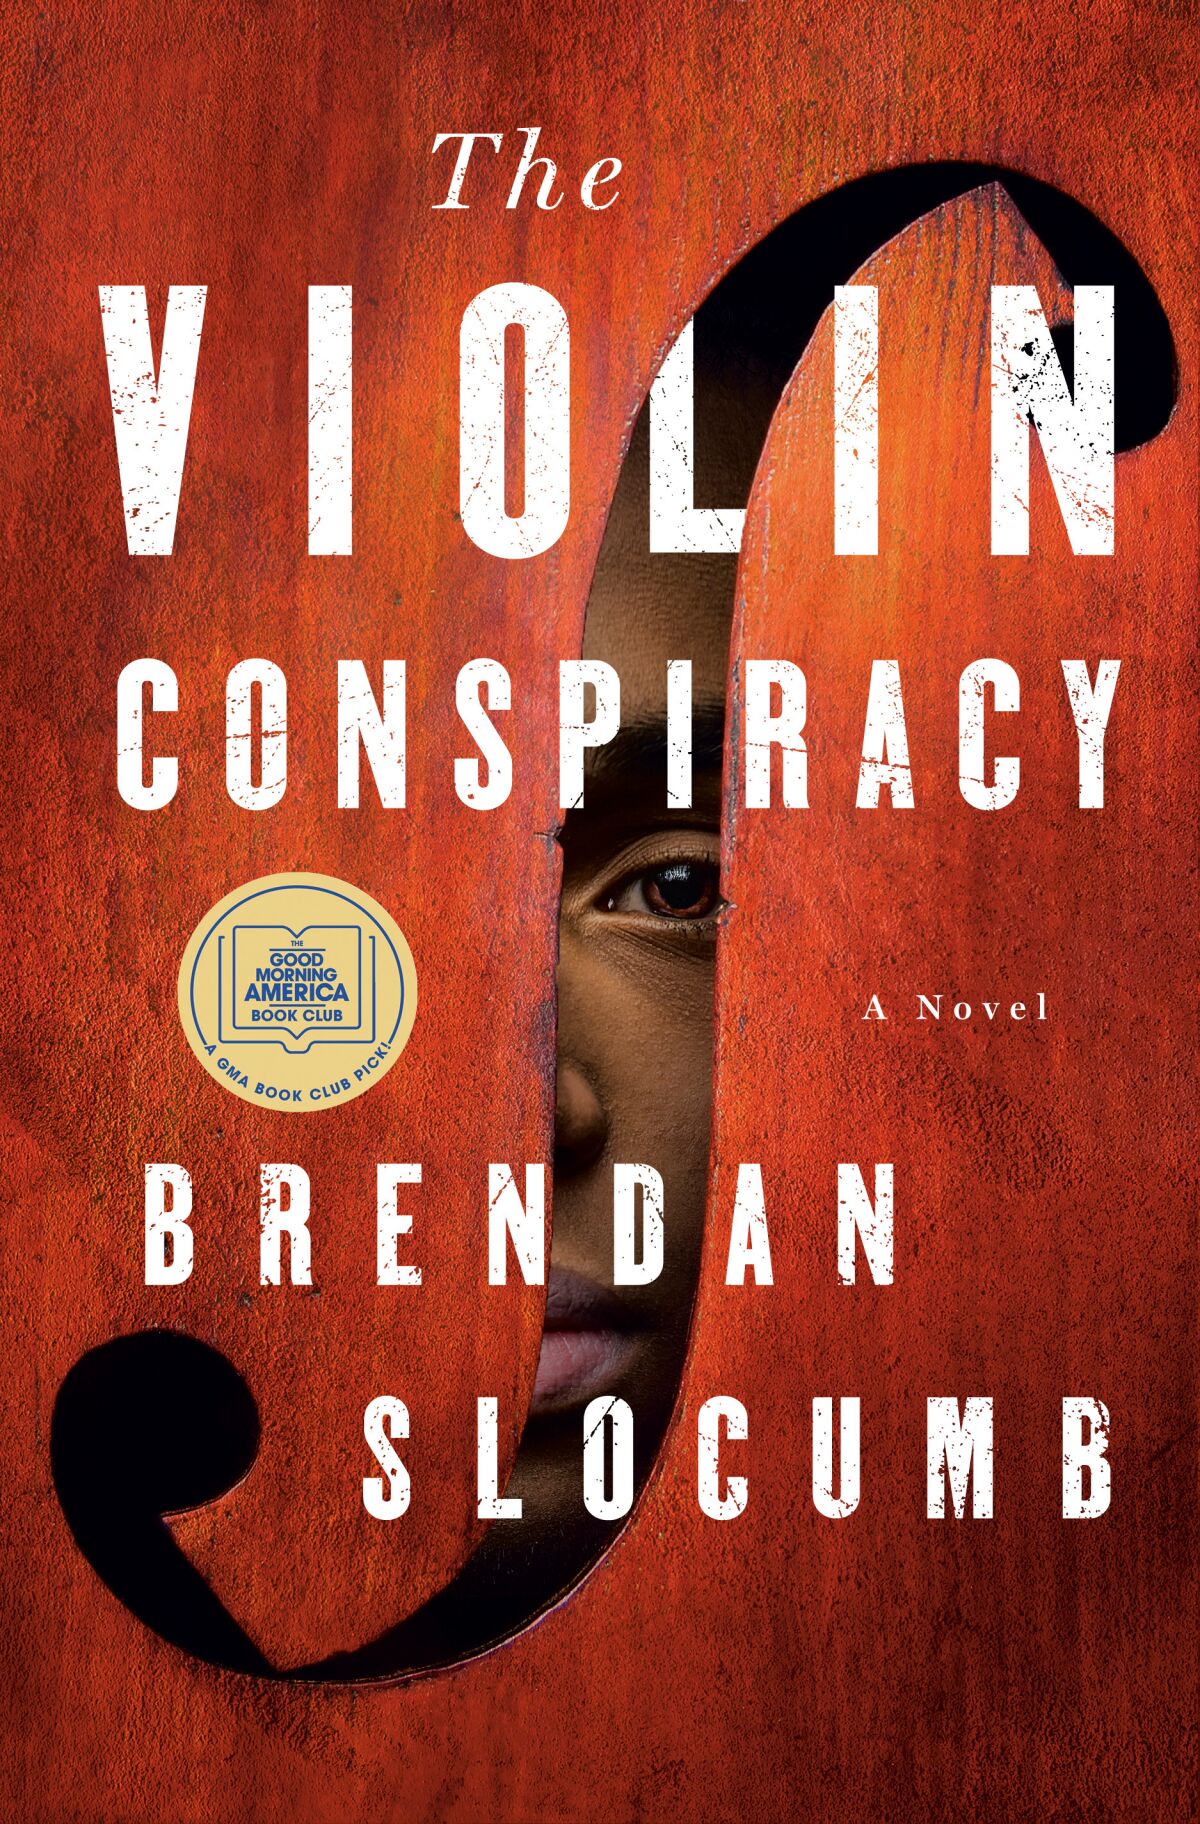 "The Violin Conspiracy," by Brendan Slocumb